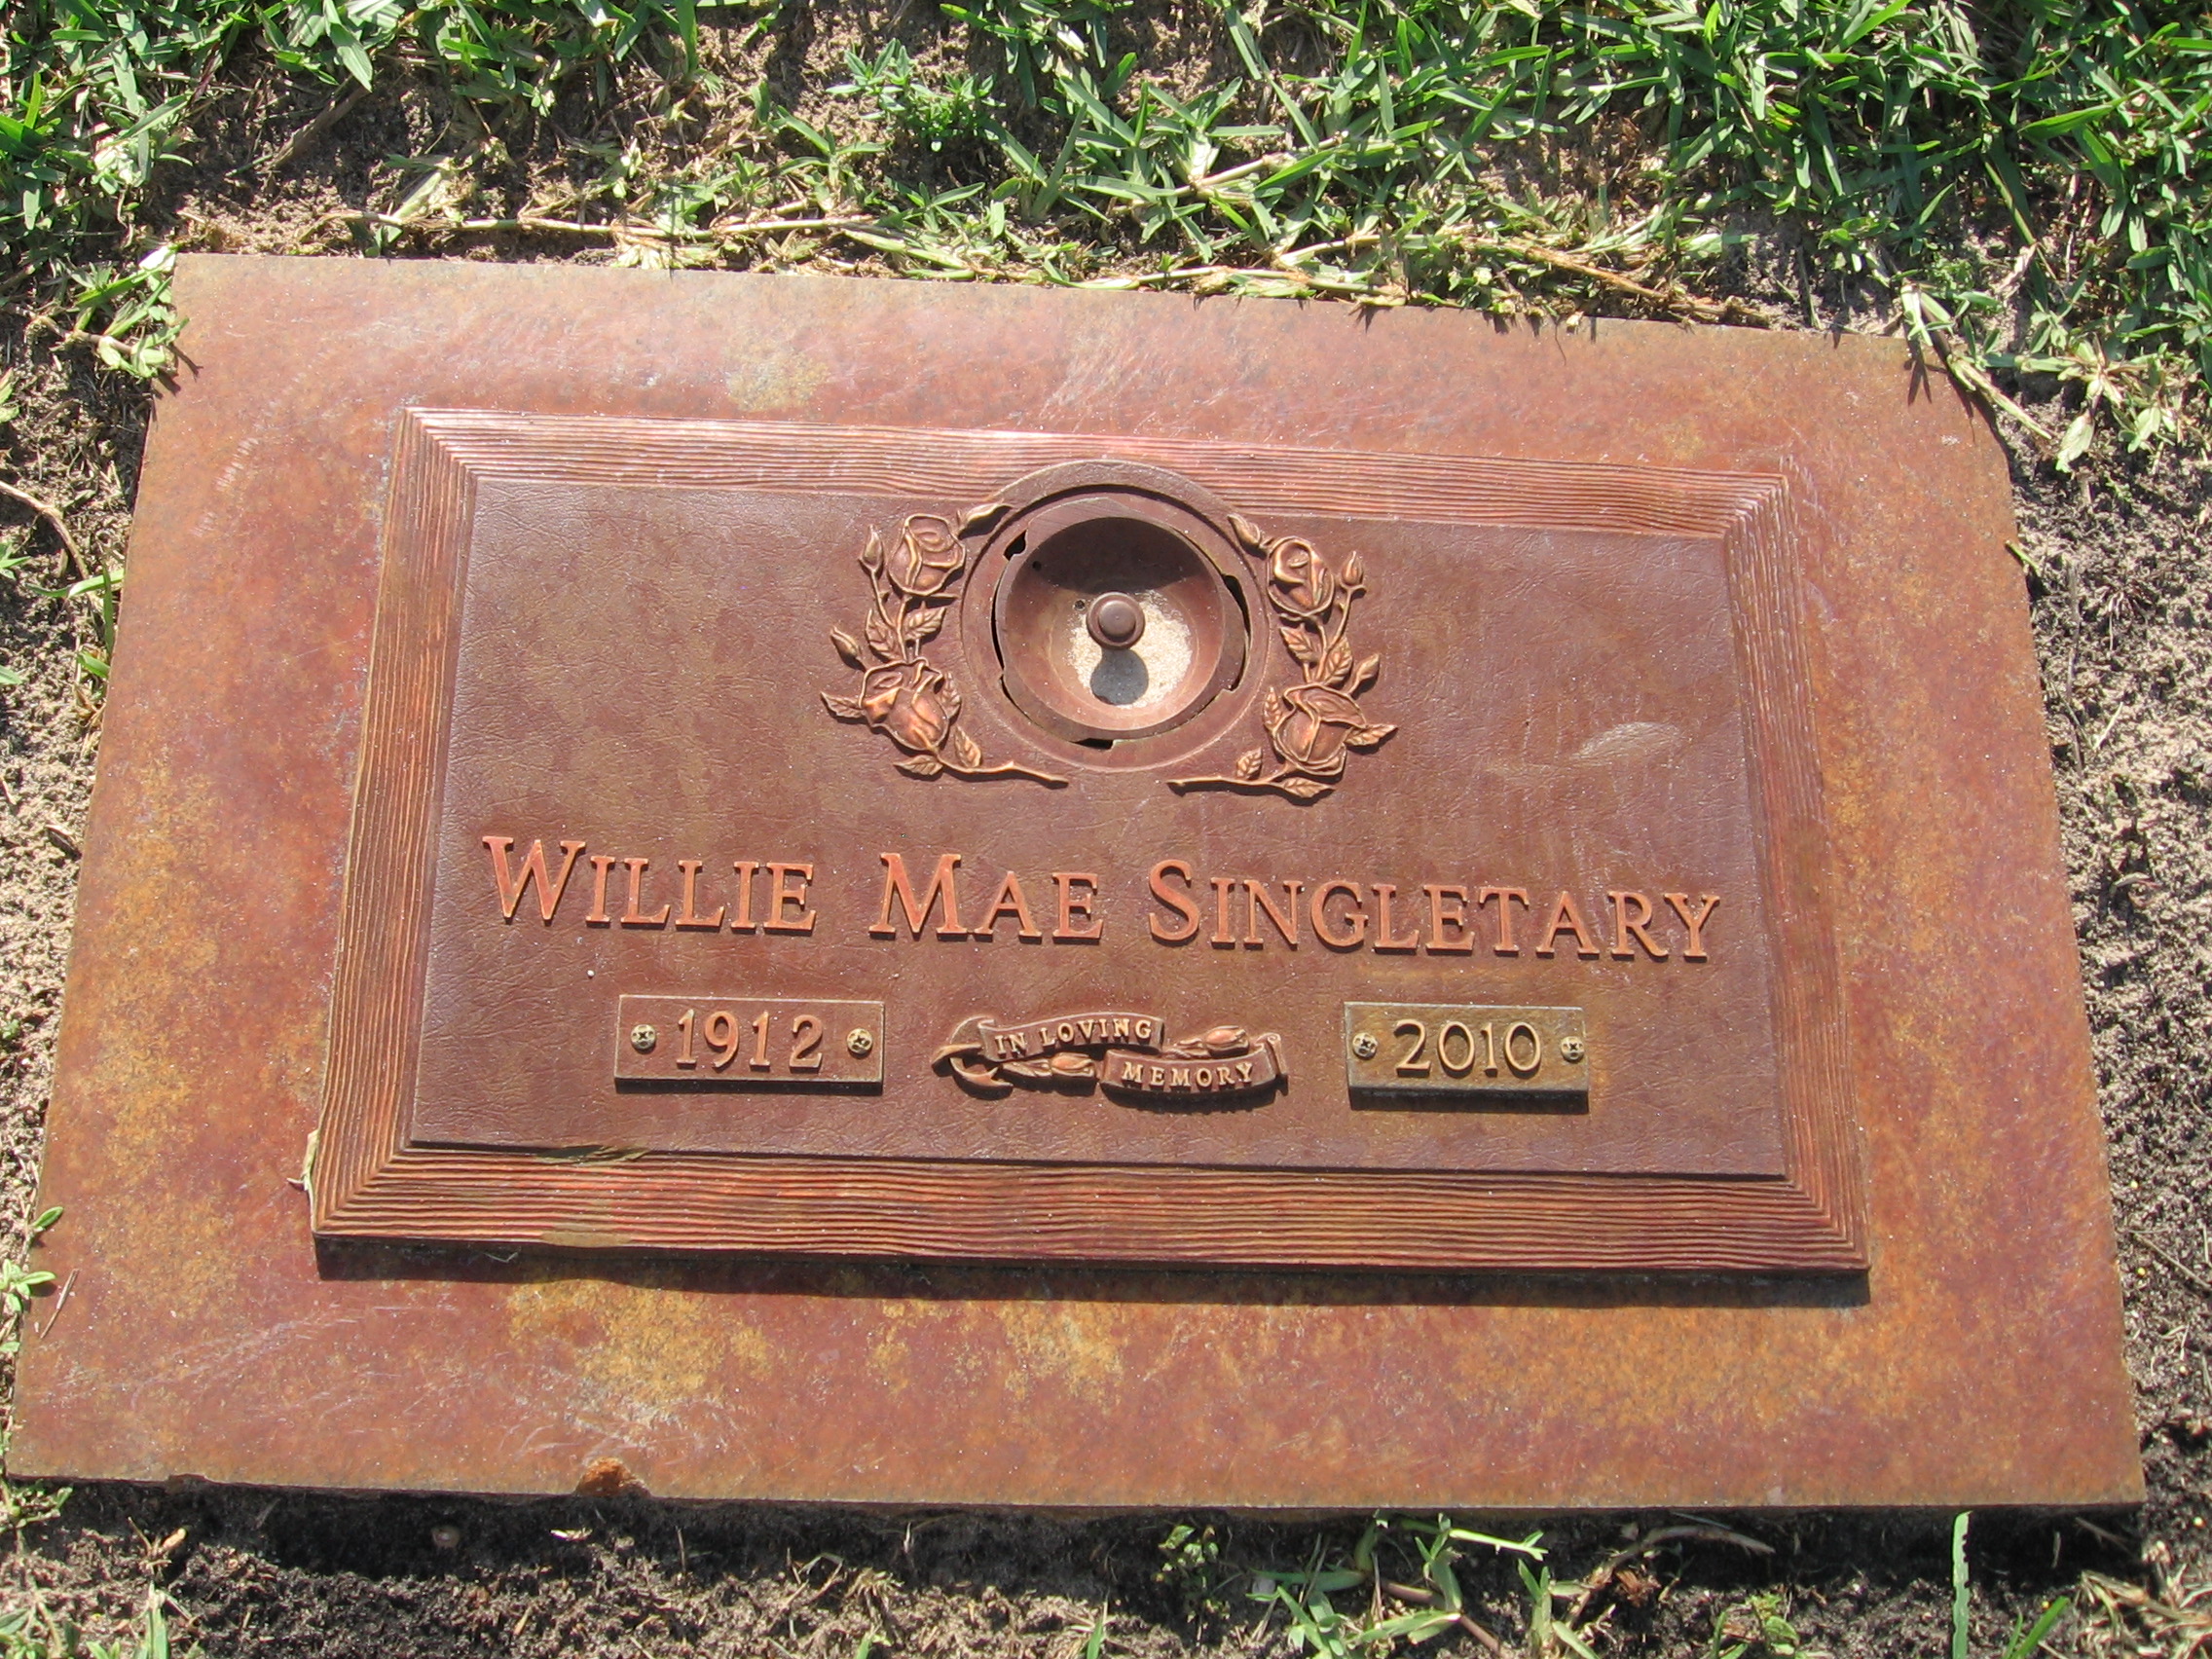 Willie Mae Singletary